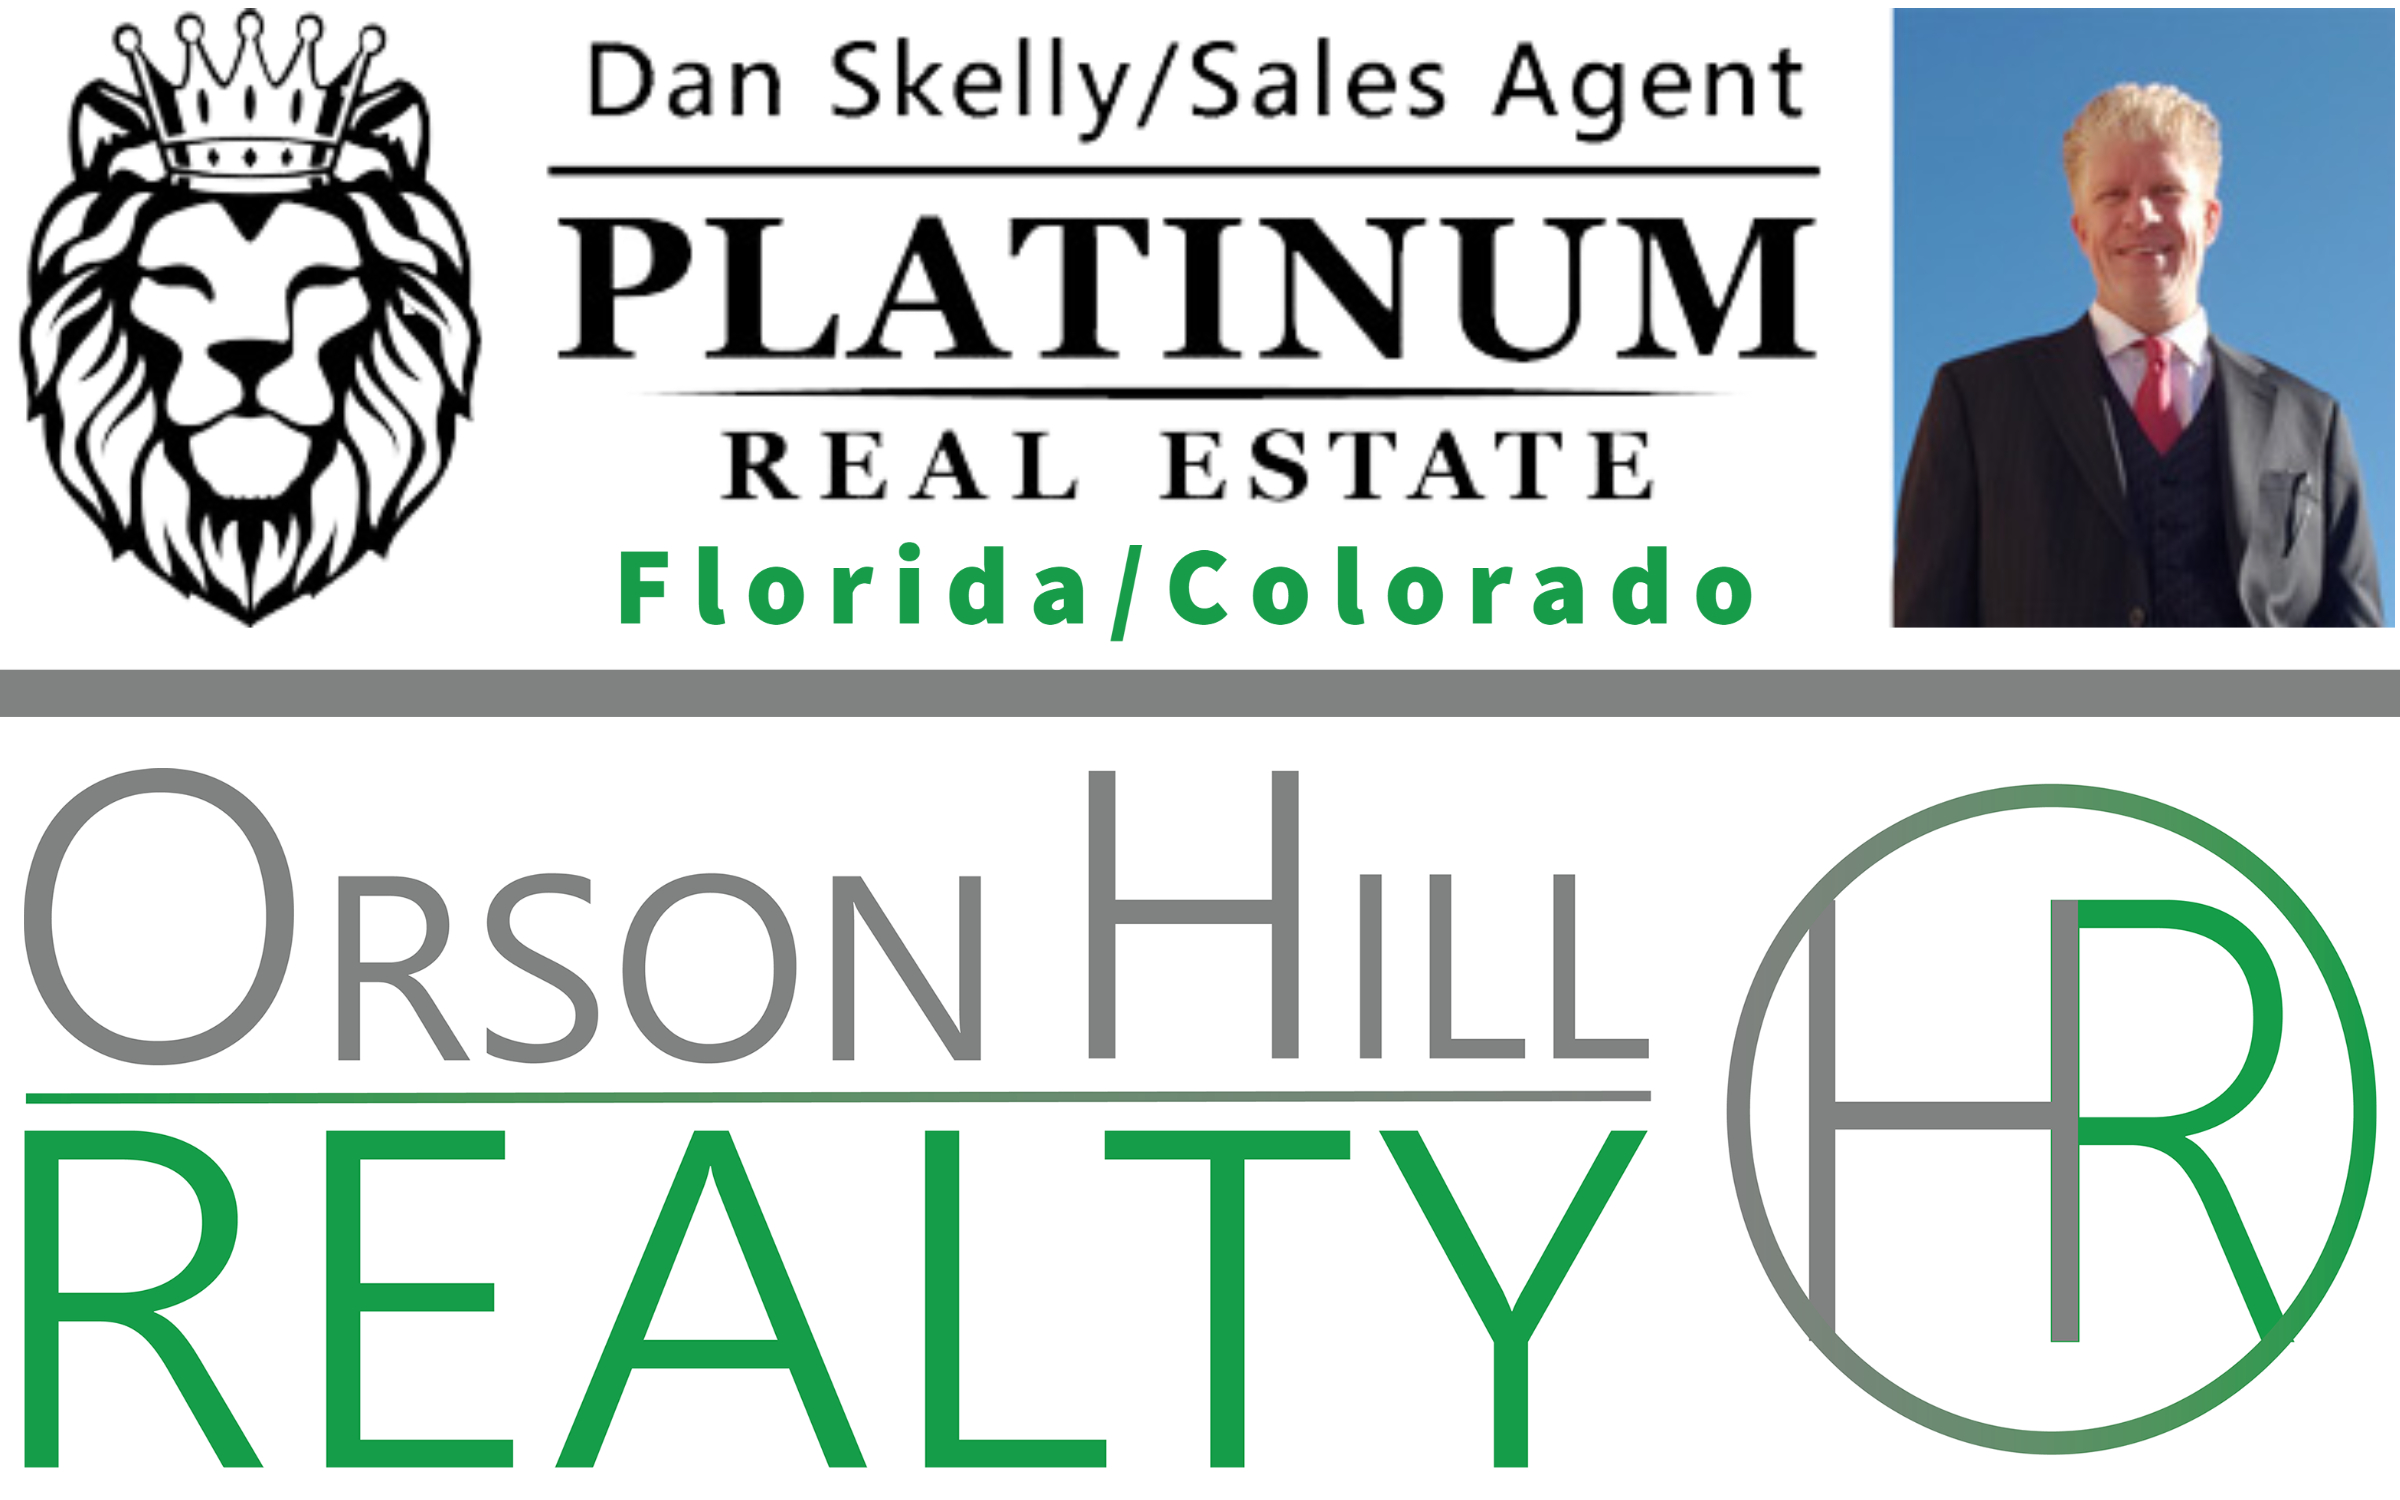 Real Estate Agents Colorado and Florida